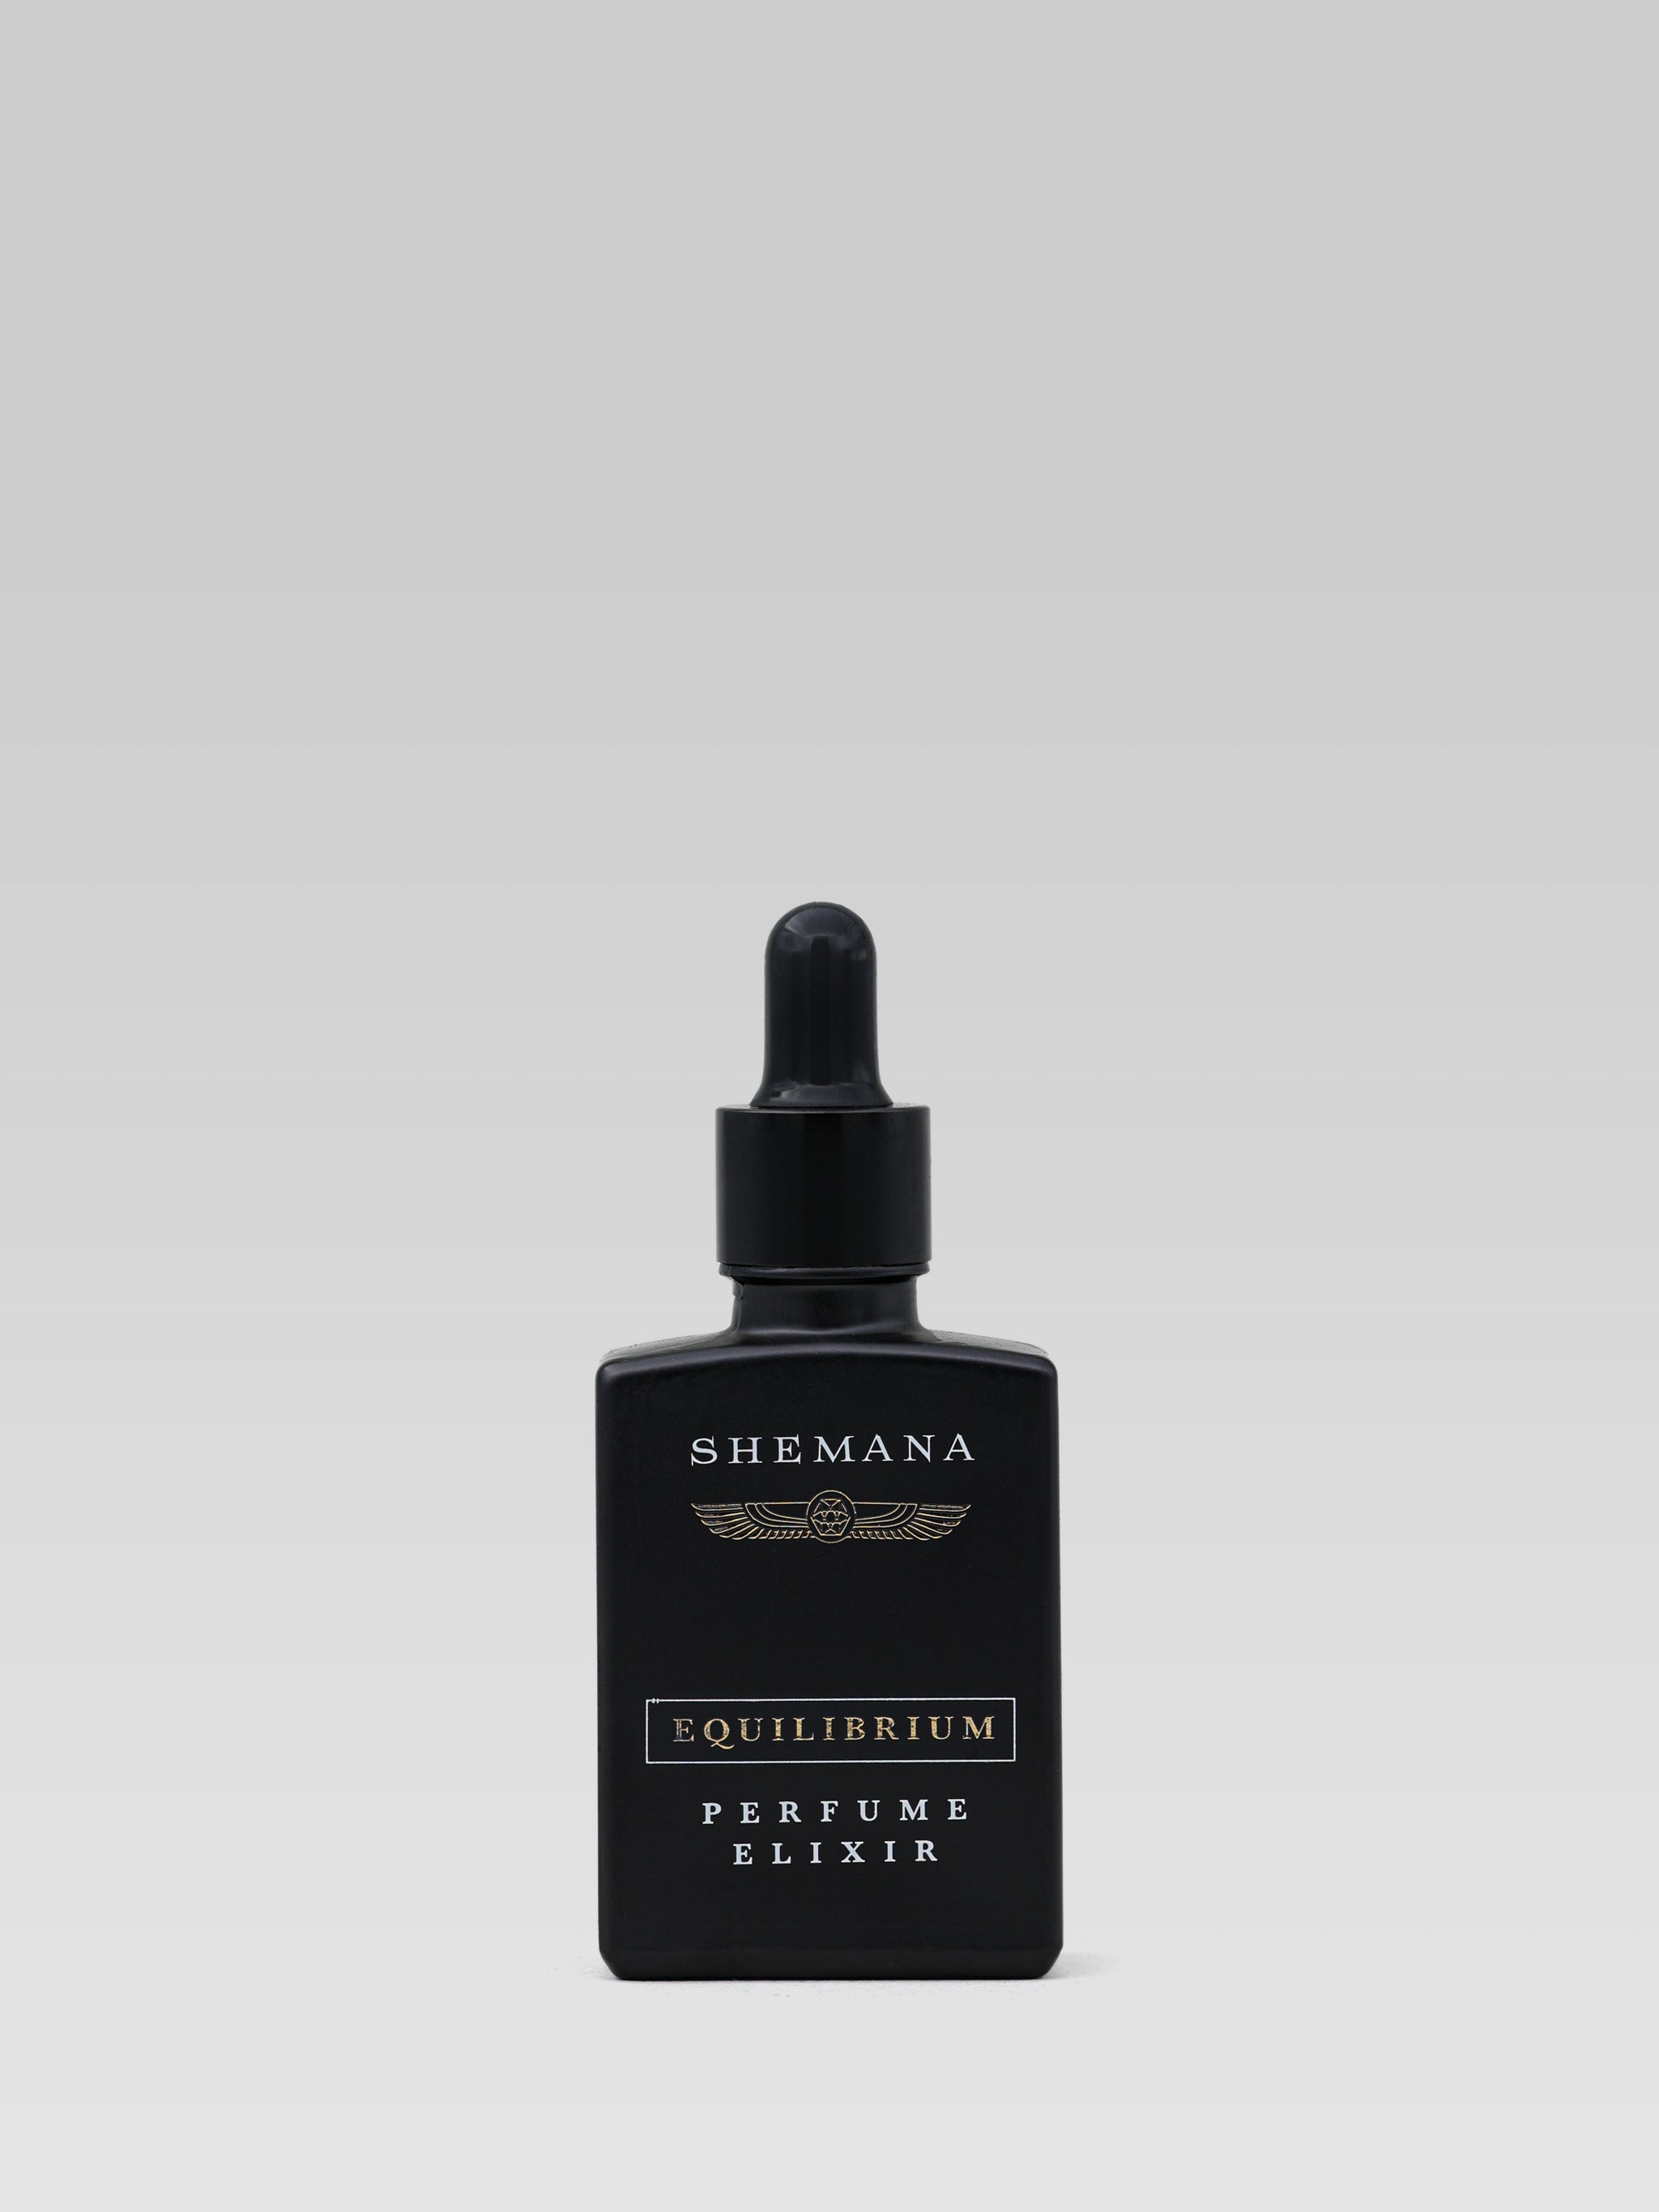 Shemana Equilibrium Perfume Elixir product shot 